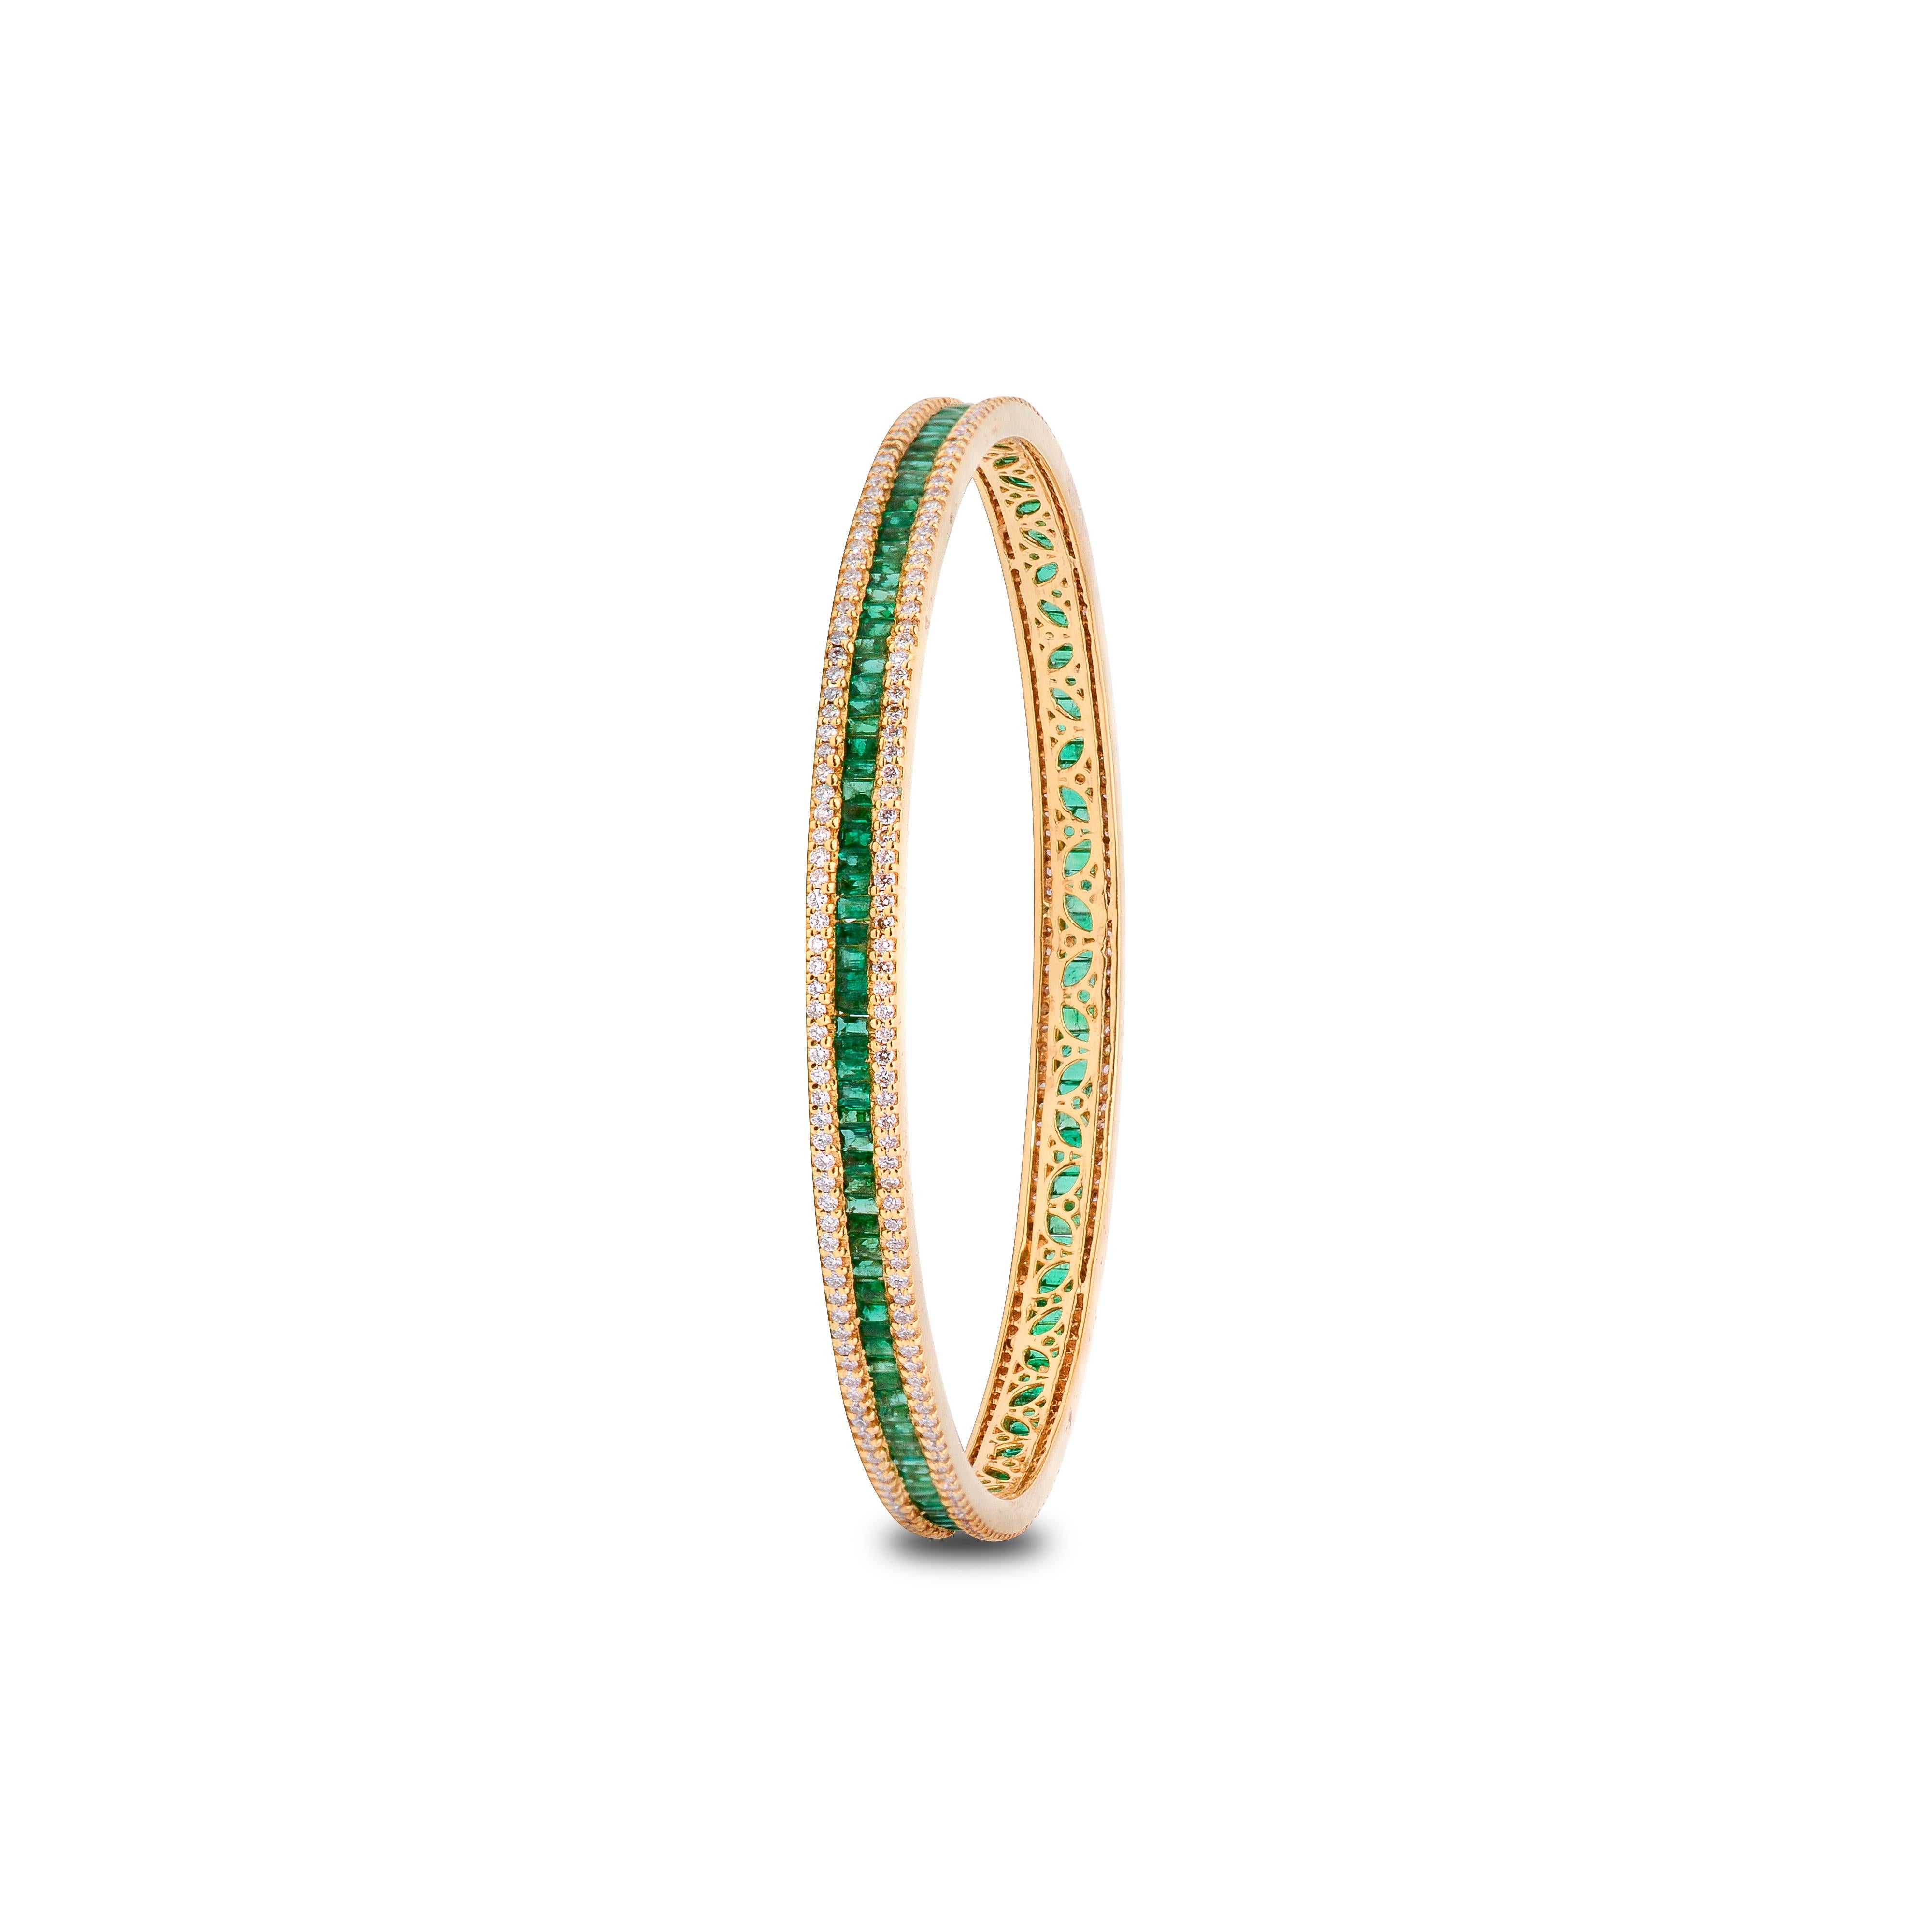 18 Karat Yellow Gold Emerald Diamond Bangle Bracelet.

Elegant bangle set in 18 karat yellow gold, studded with diamonds and emeralds. Ideal for evening wear.

Diamond - 1.74cts
Emeralds - 3.70cts